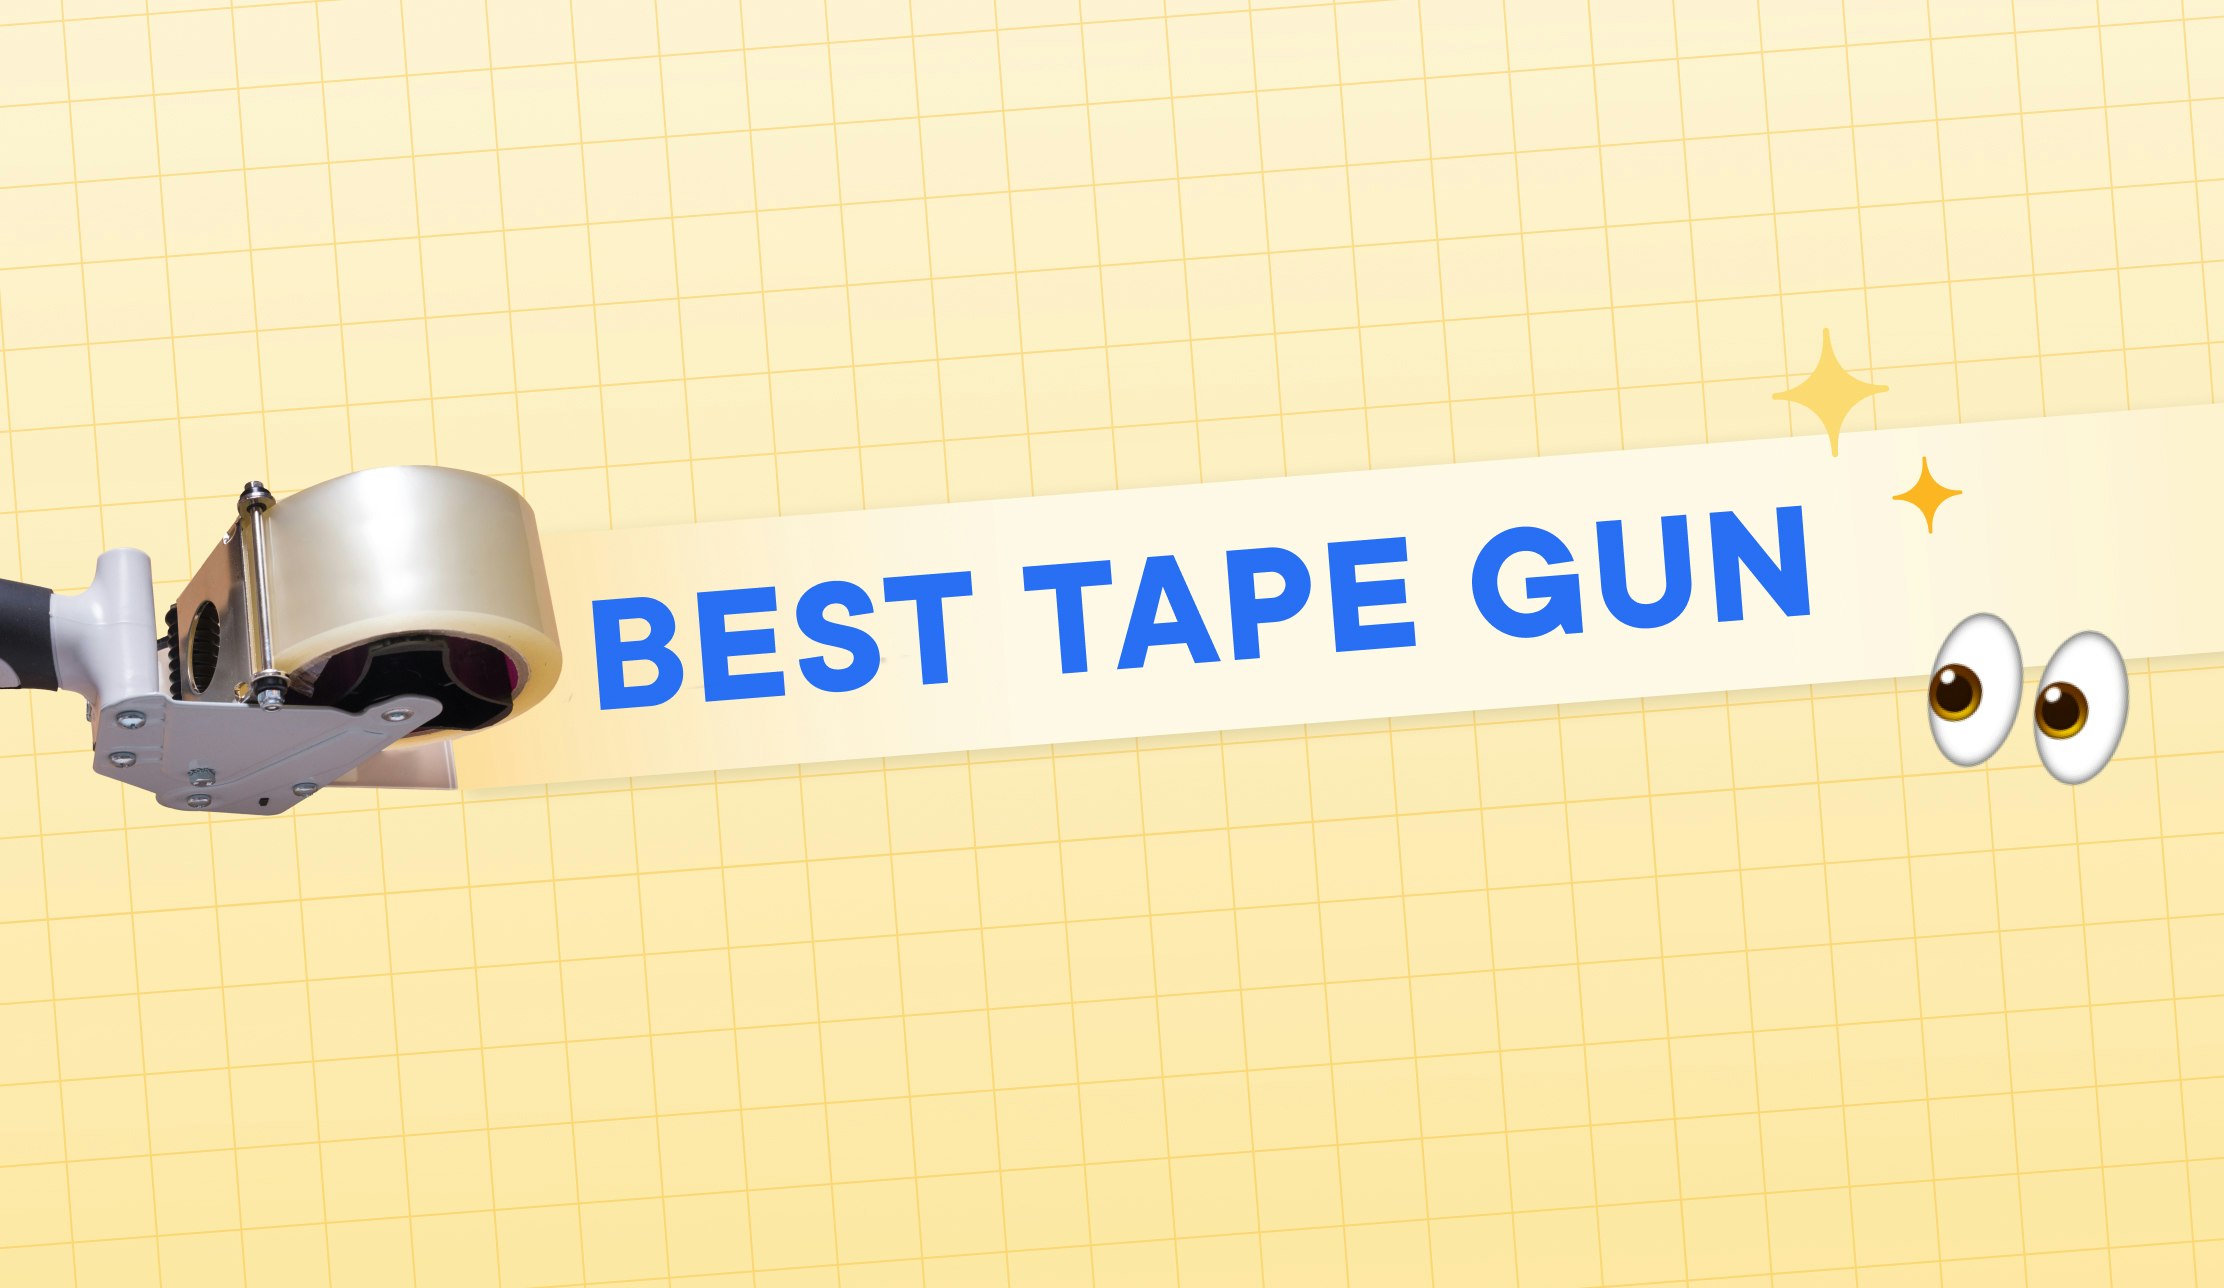 Best tape gun